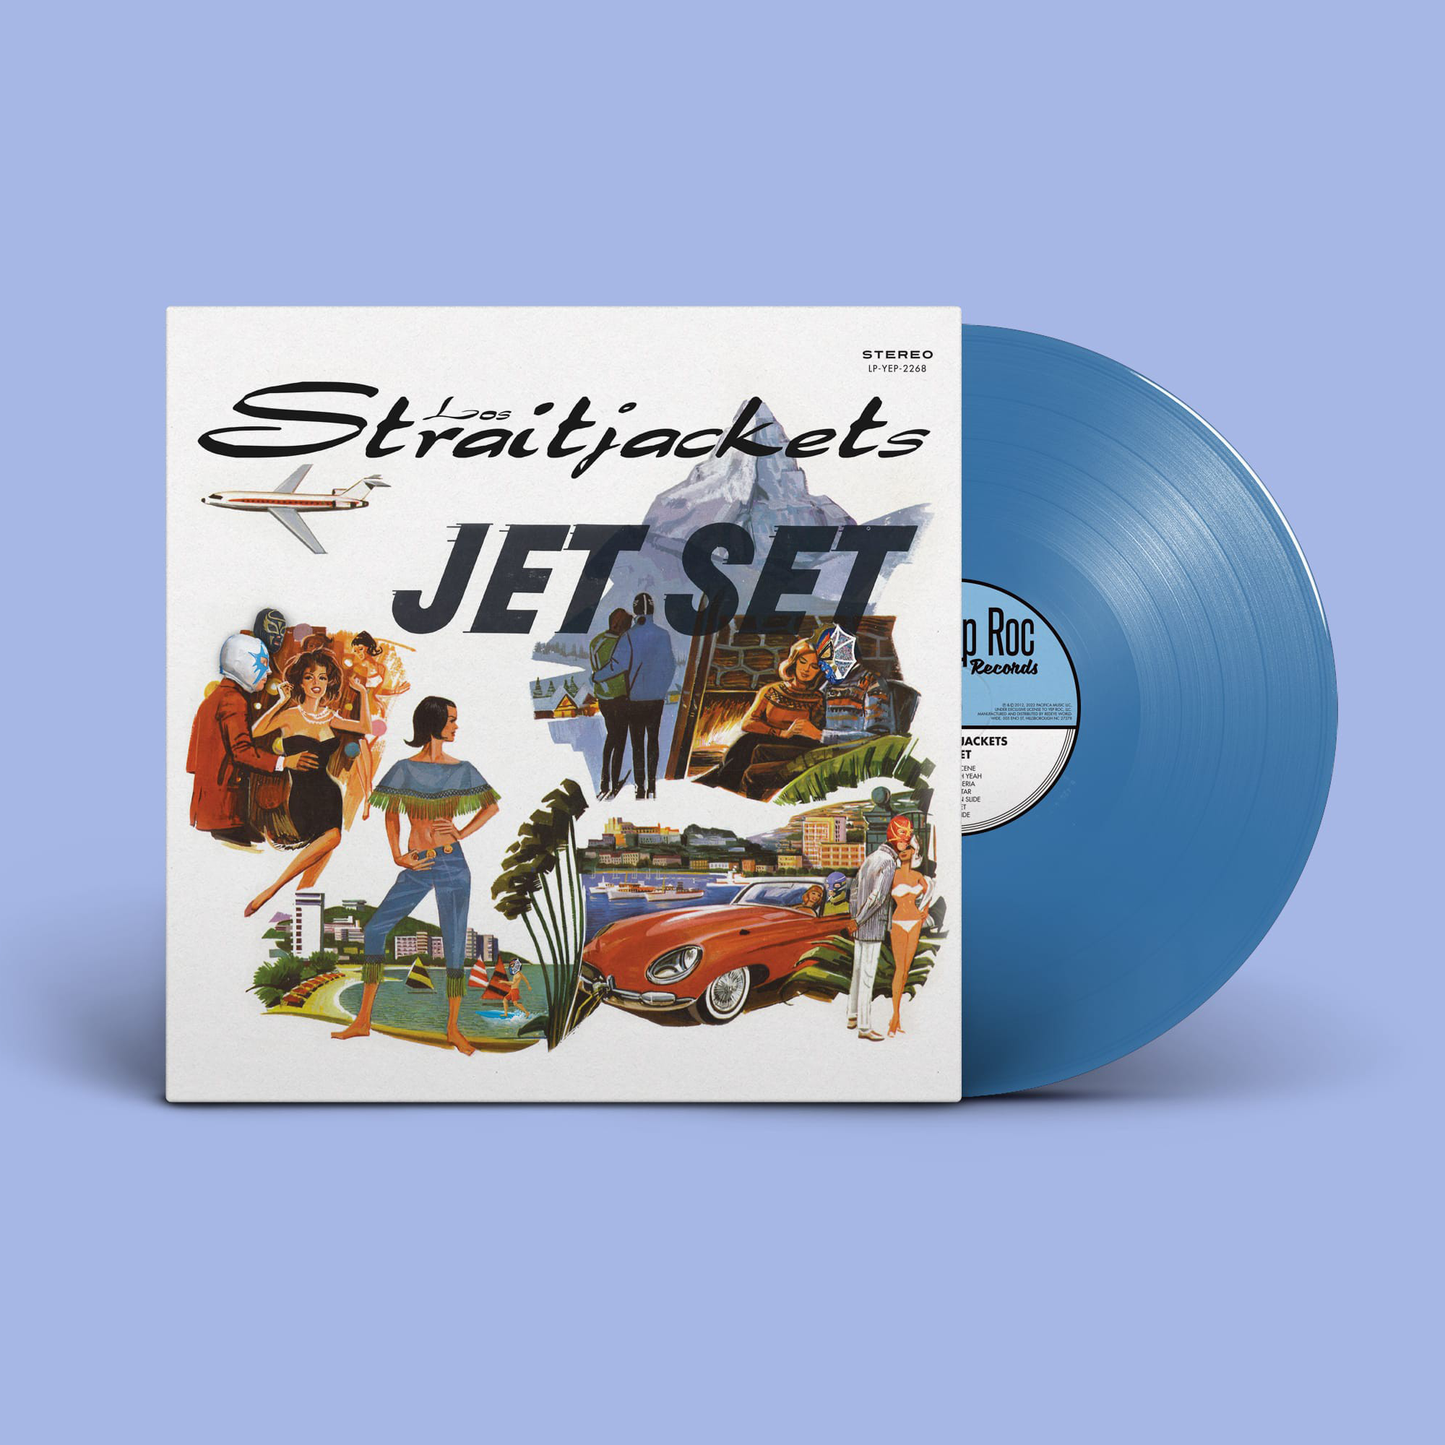 Los Straitjackets "Jet Set" LP